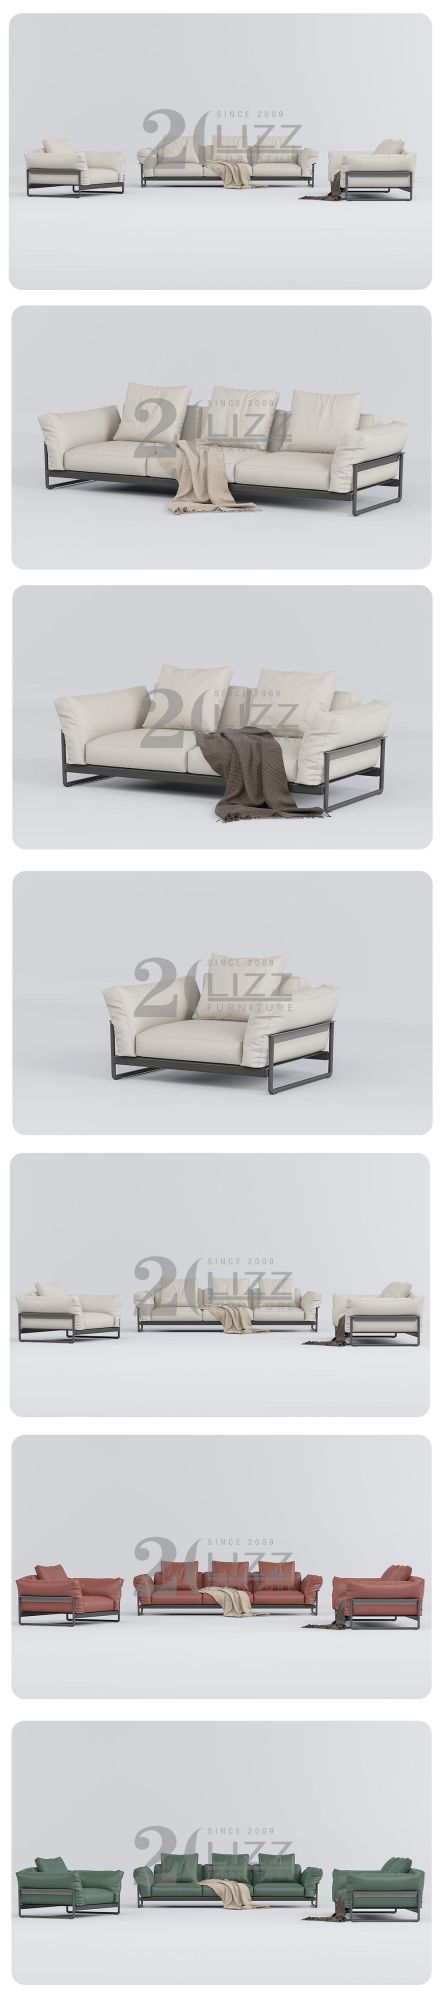 Hot Selling Minimalist Italian Design Hotel Home Furniture Modern Living Room Green Fabric Sofa